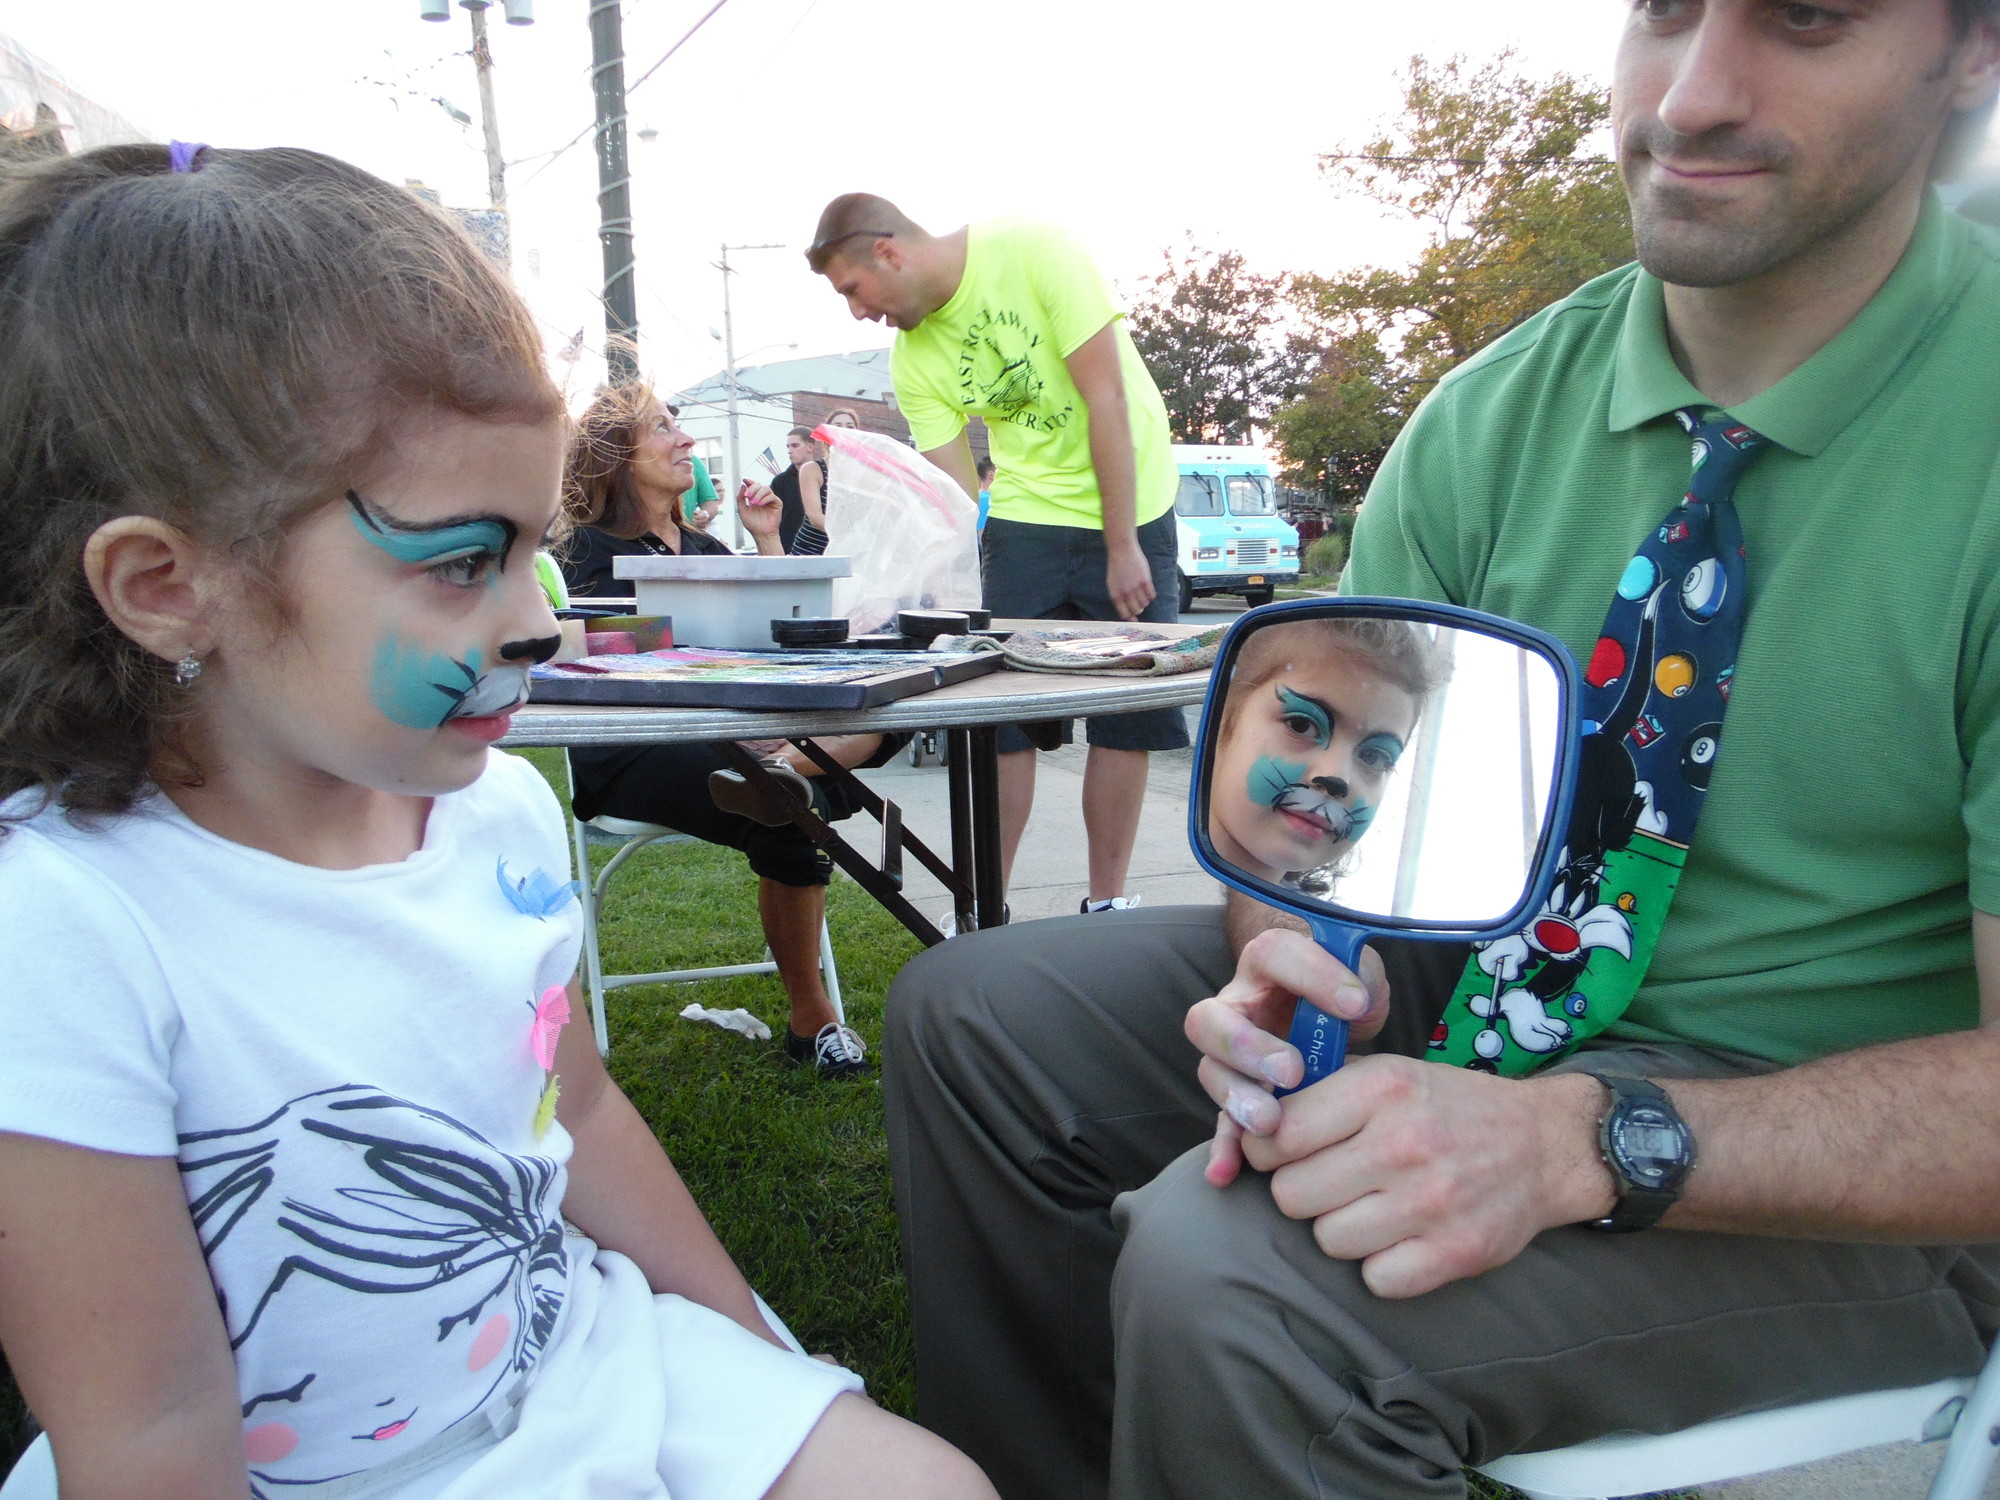 Giada Artusa, 5, had her face painted at the fair.